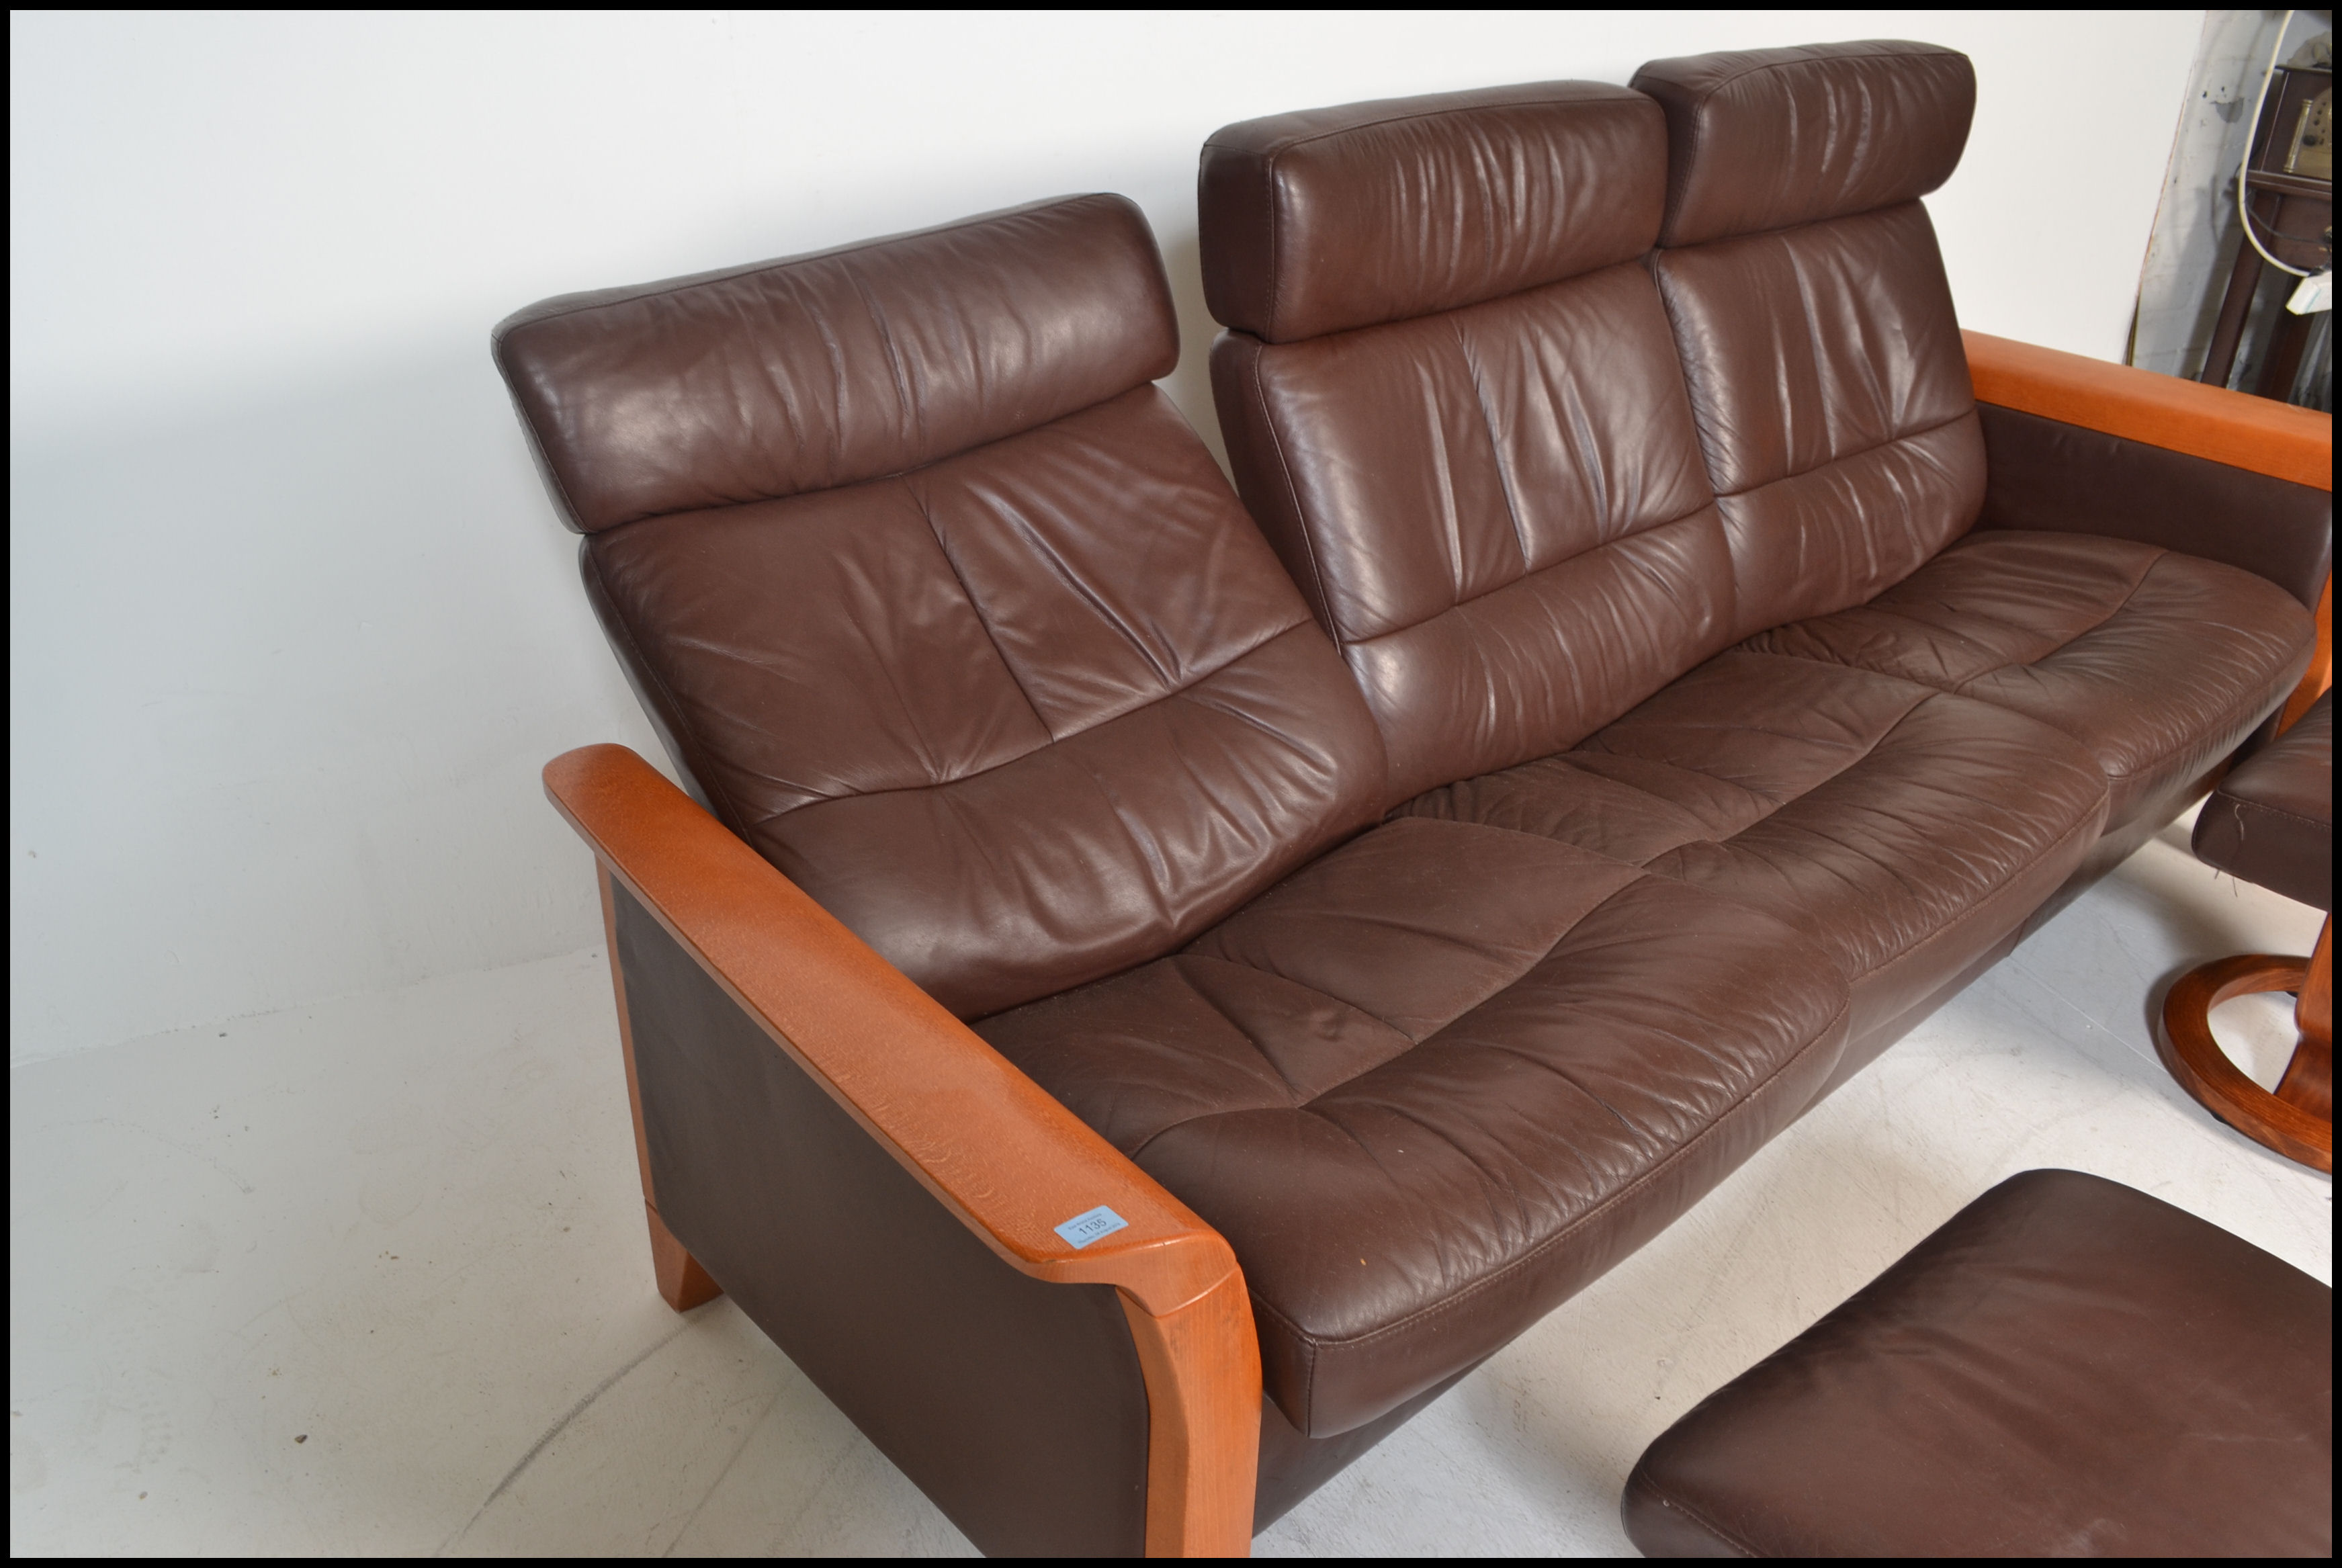 An Ekornes Stressless three seater brown leather Reclining Sofa of Scandinavian design, having - Image 6 of 6